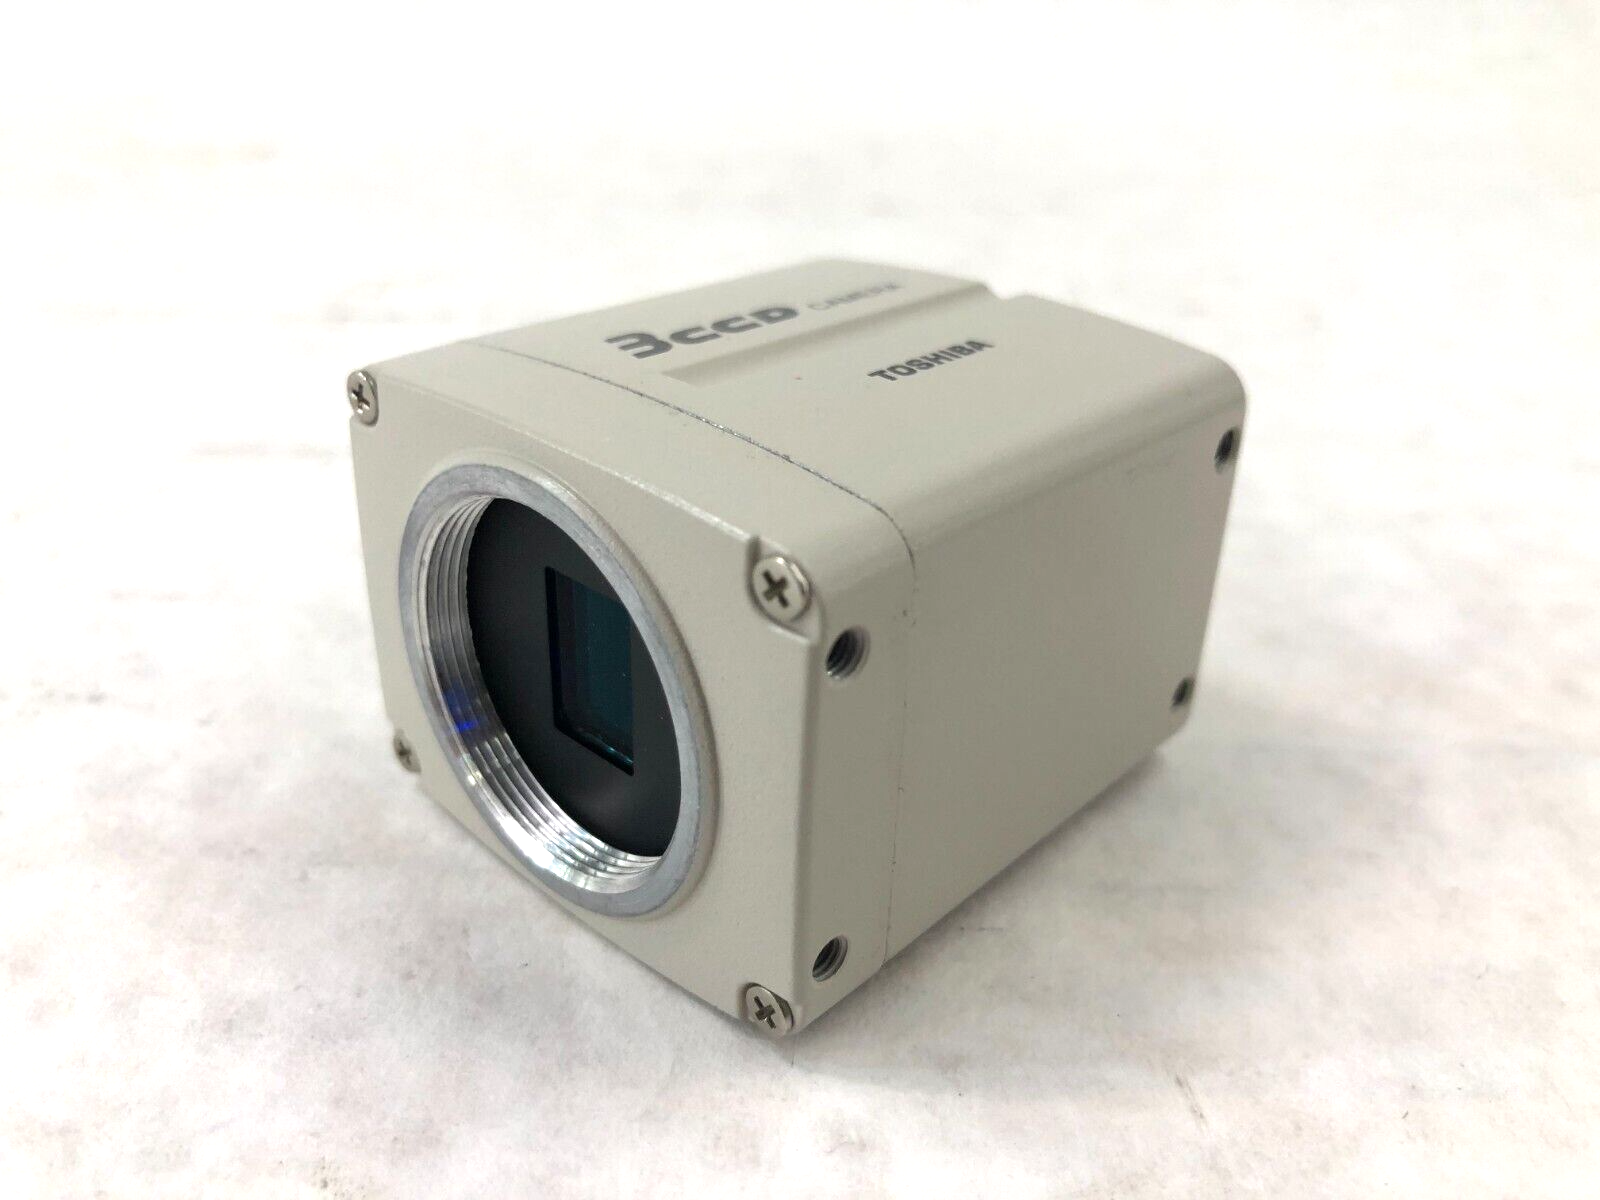 Toshiba JK-TU52H 3-CCD Camera Head Untested